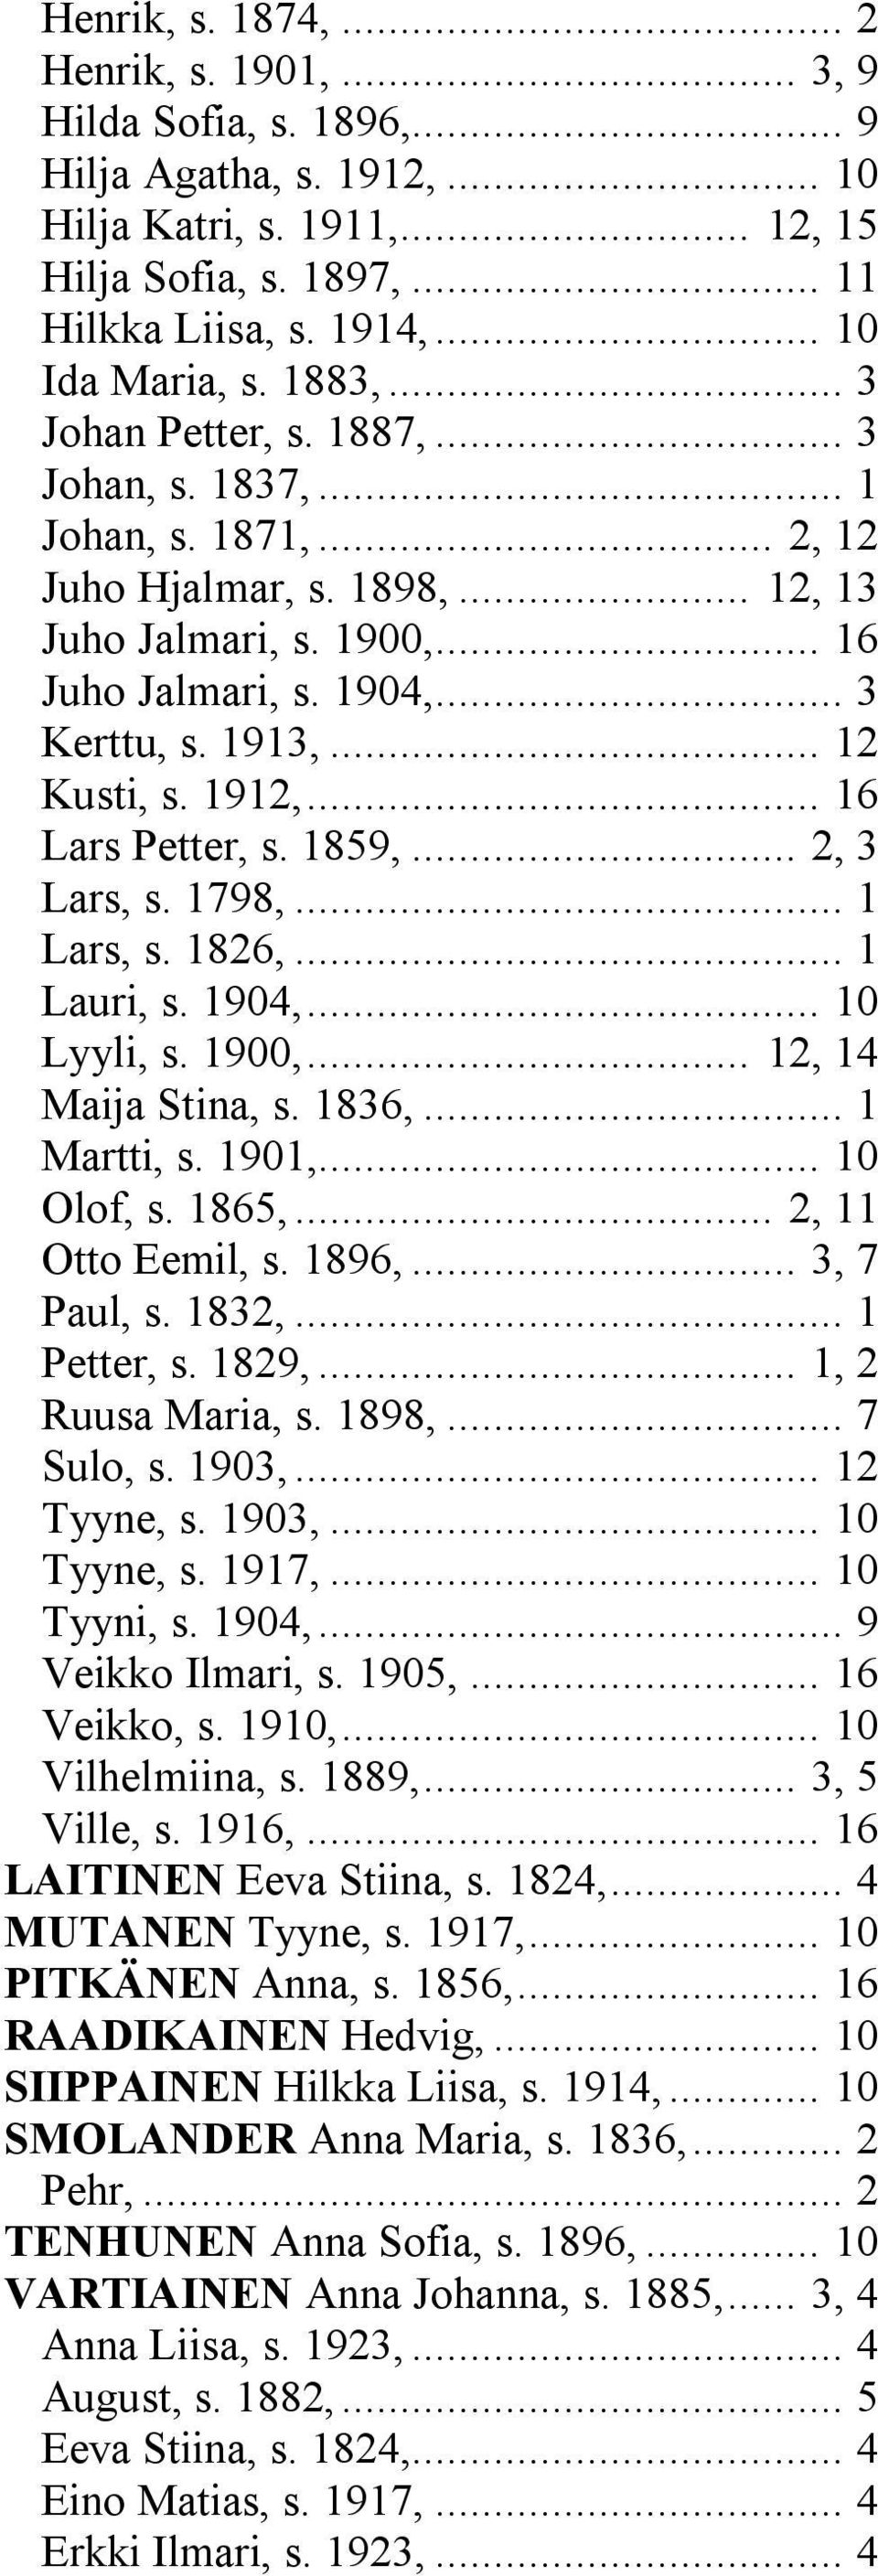 .. 3 Kerttu, s. 1913,... 12 Kusti, s. 1912,... 16 Lars Petter, s. 1859,... 2, 3 Lars, s. 1798,... 1 Lars, s. 1826,... 1 Lauri, s. 1904,... 10 Lyyli, s. 1900,... 12, 14 Maija Stina, s. 1836,.